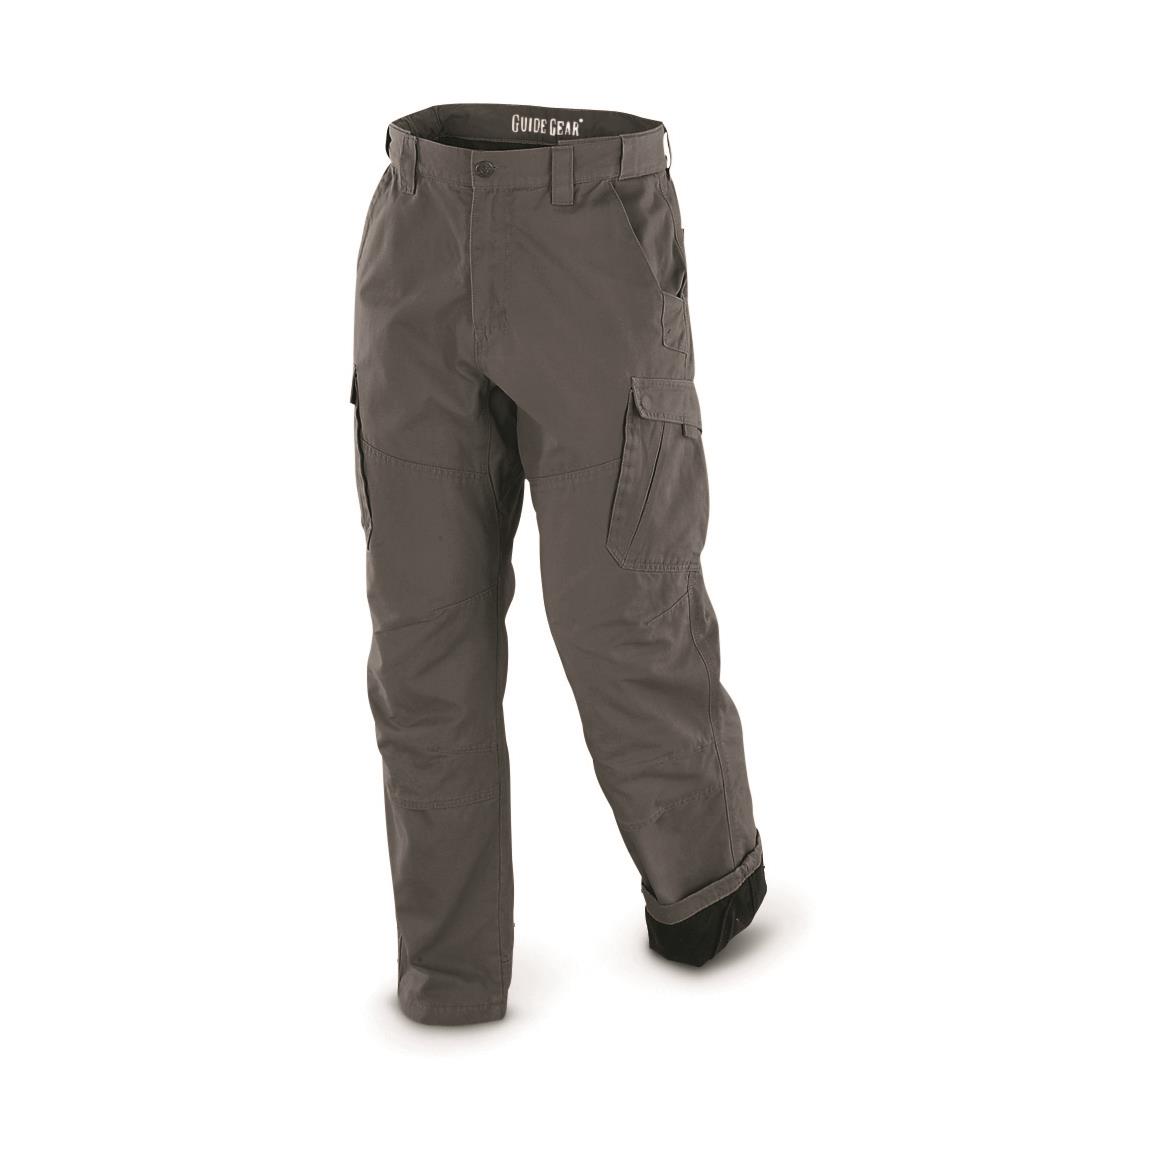 Guide Gear Men's Fleece Lined Canvas Work Pants - 607608, Insulated ...